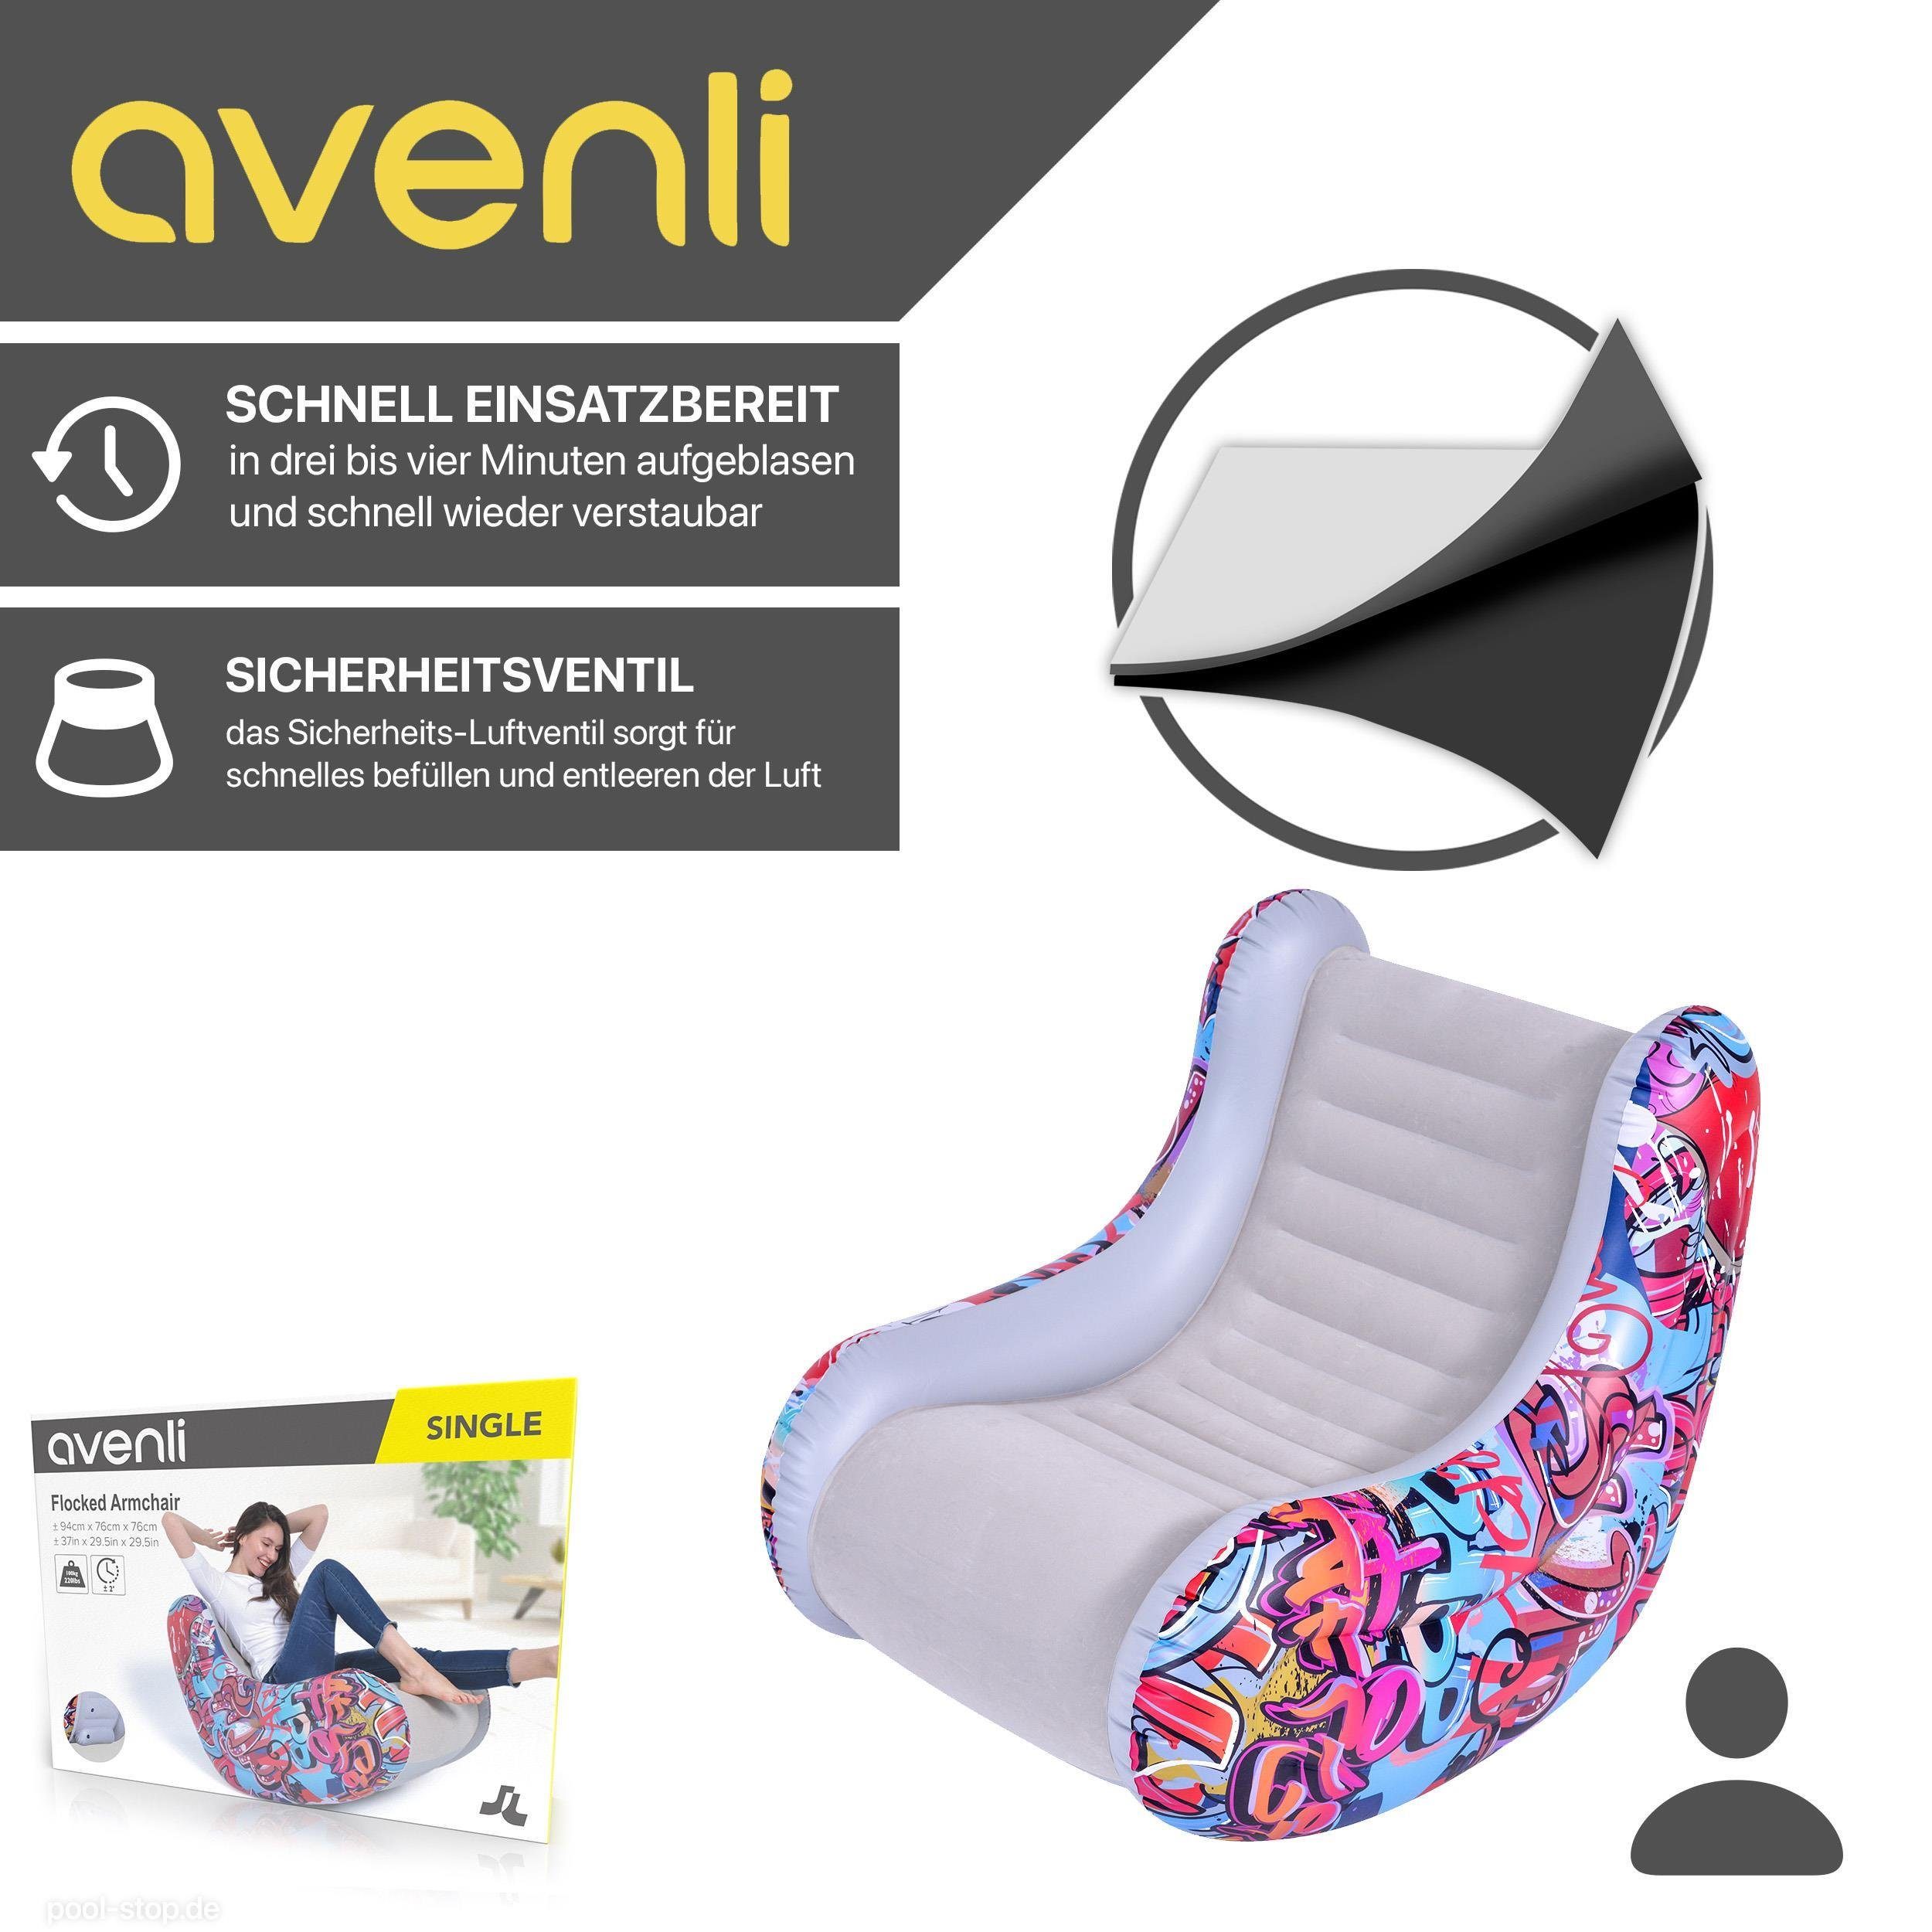 Avenli Luftsessel aufblasbarer Lounge Sessel Rückenlehne, 94x76x76 mit (aufblasbarer Sessel), cm